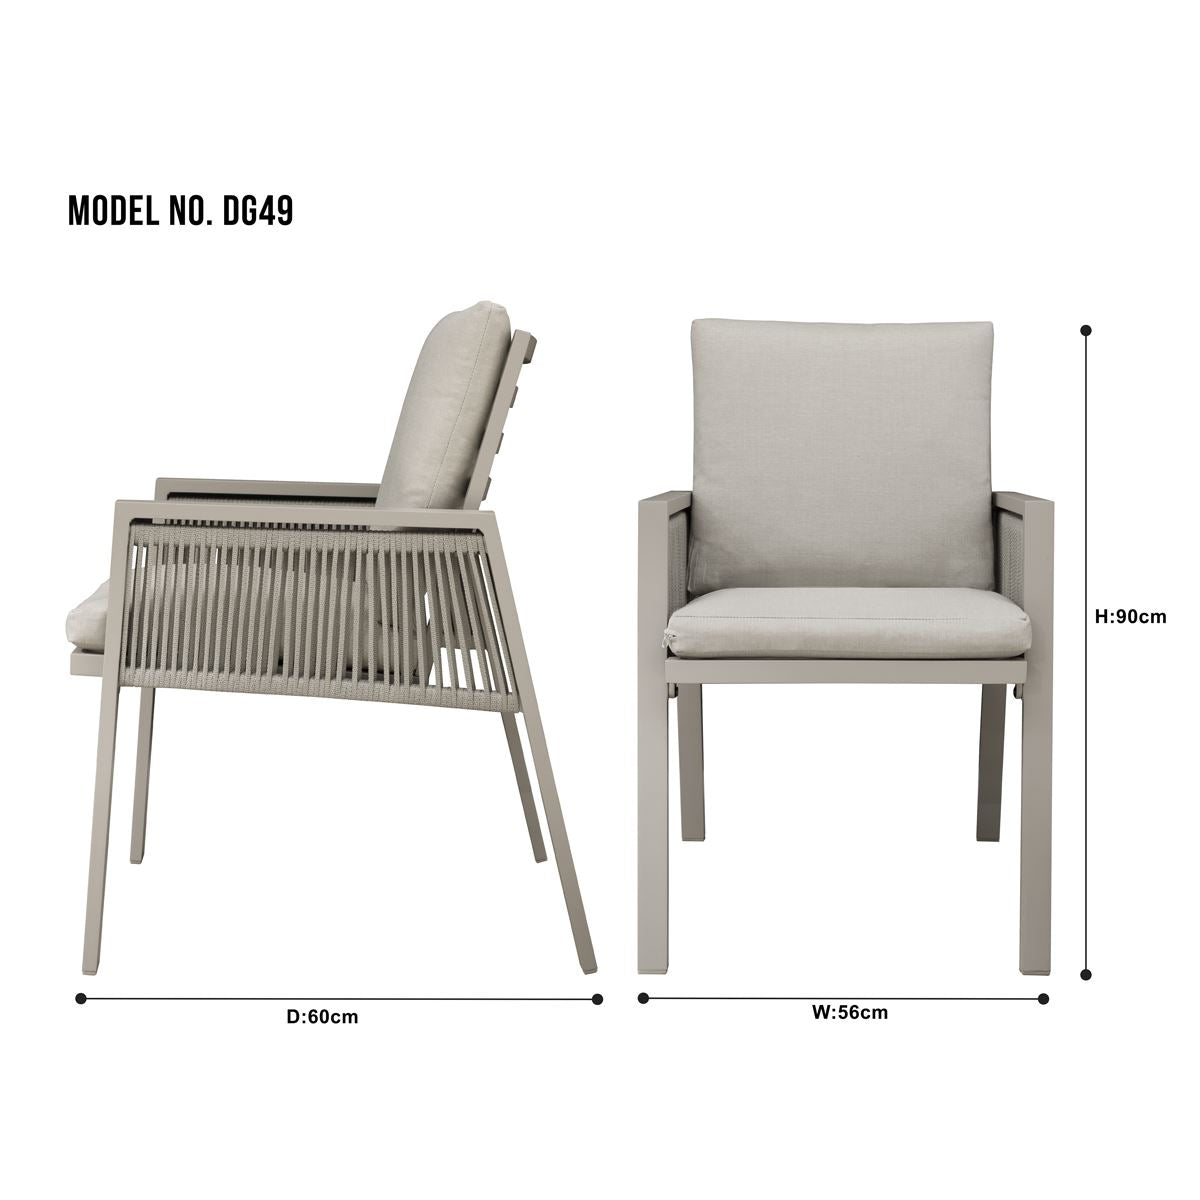 Dellonda Fusion Garden/Patio Aluminium Dining Chair with Armrests, Set of 4, Light Grey - DG50